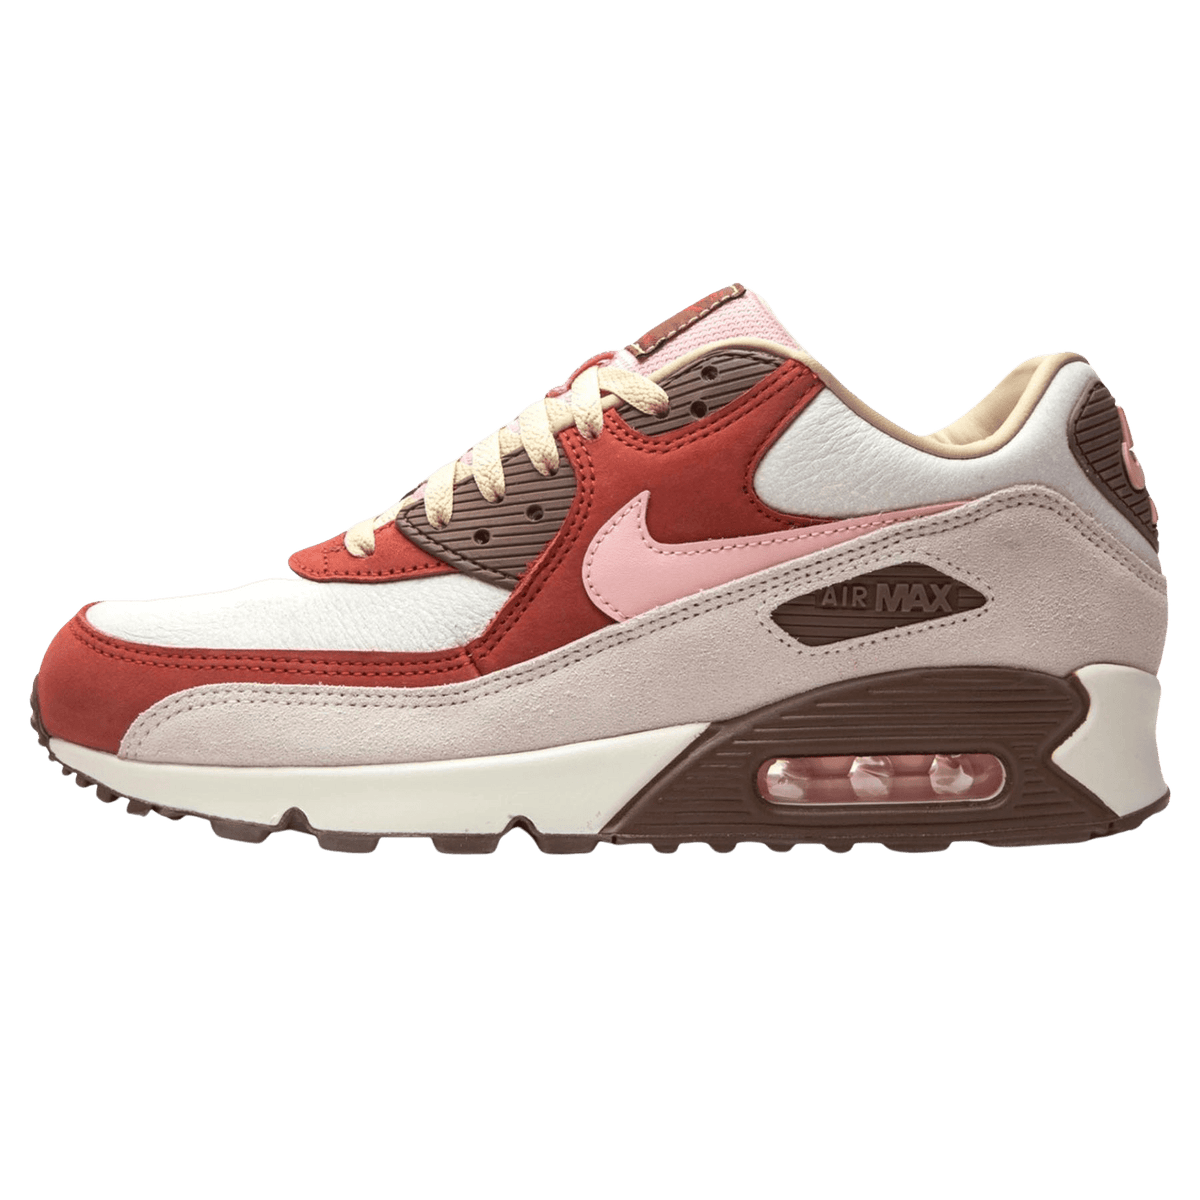 DQM x Nike acg nike acg red and white heart shox shoes women sneakers 'Bacon' 2021 - JuzsportsShops